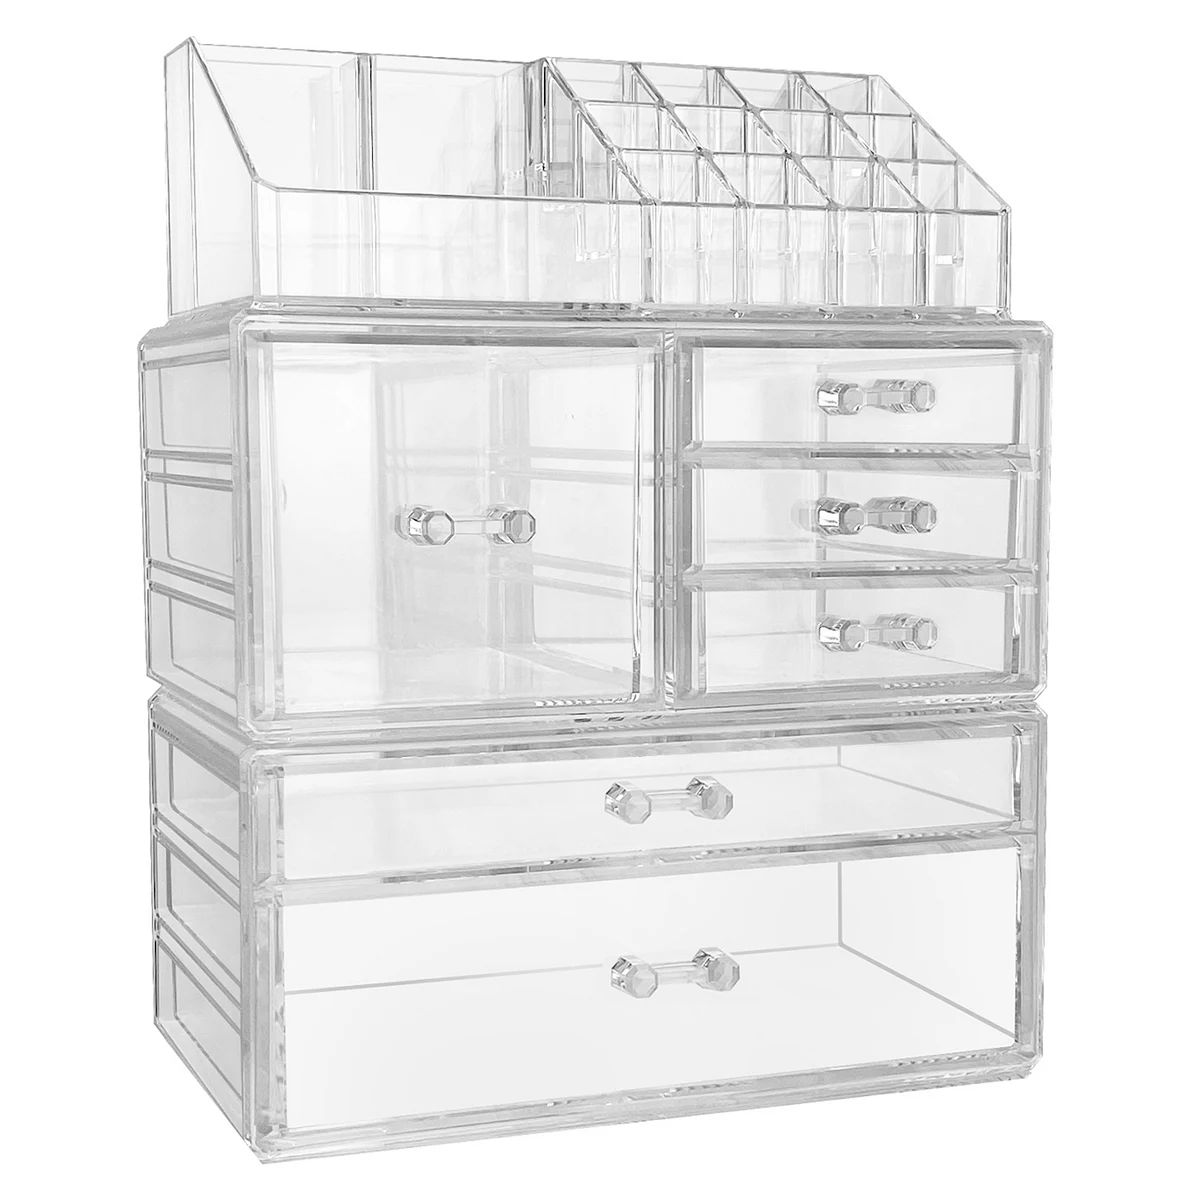 Sorbus Makeup and Jewelry Storage set | Kohl's